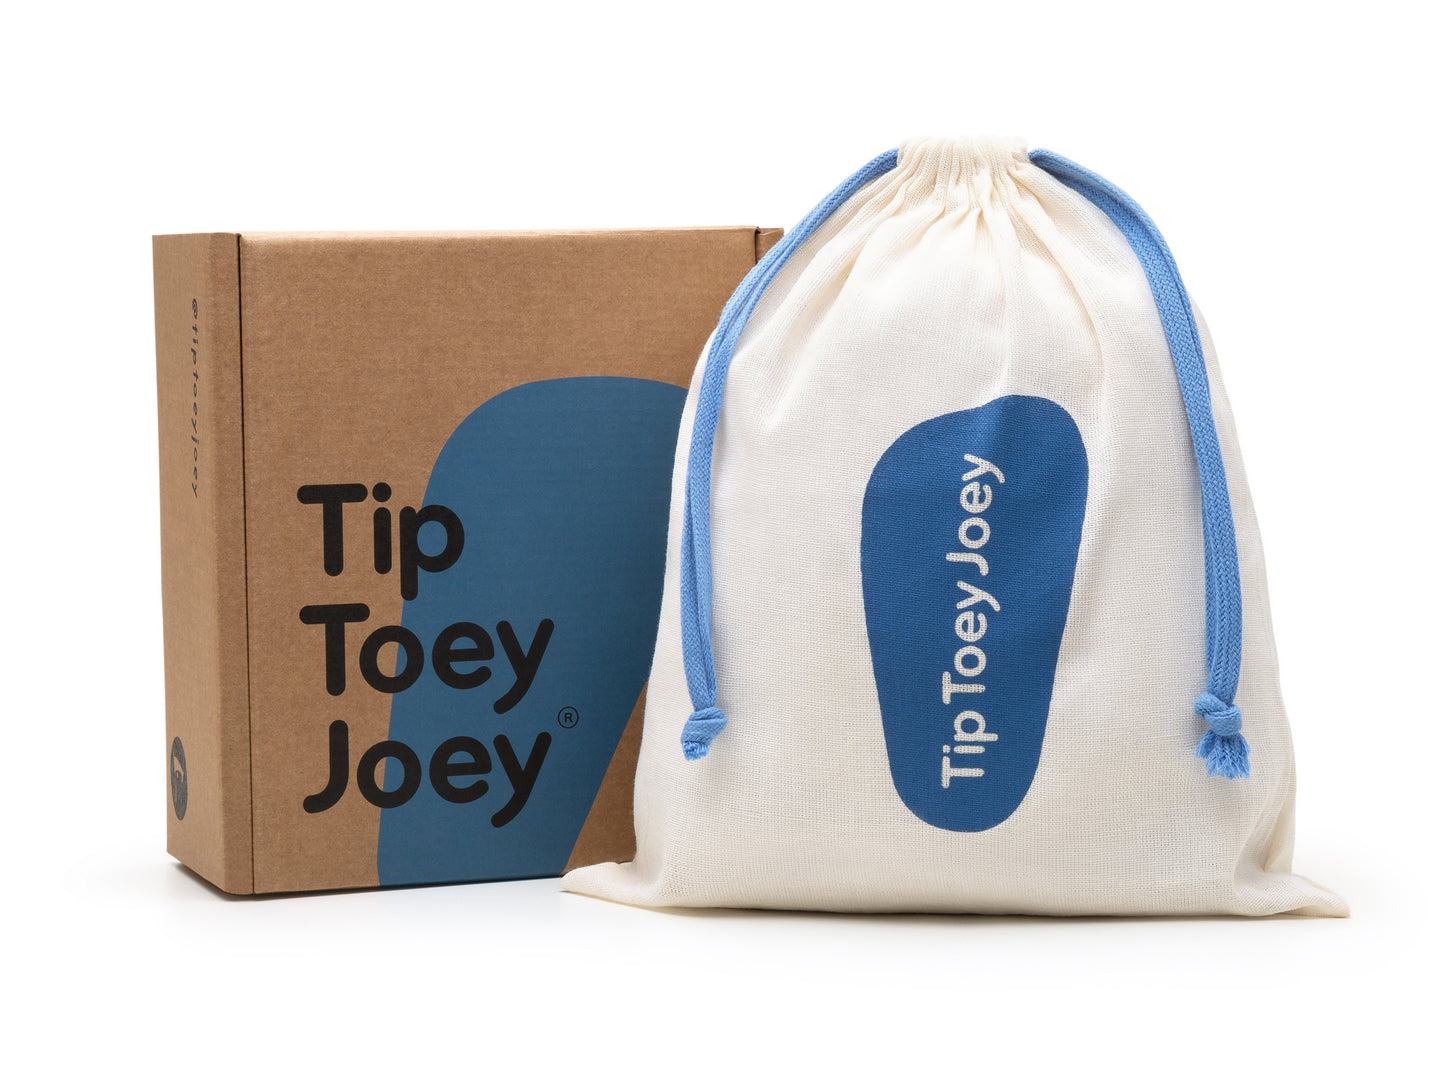 Tip Toey Joey - Ramp Colors Azul